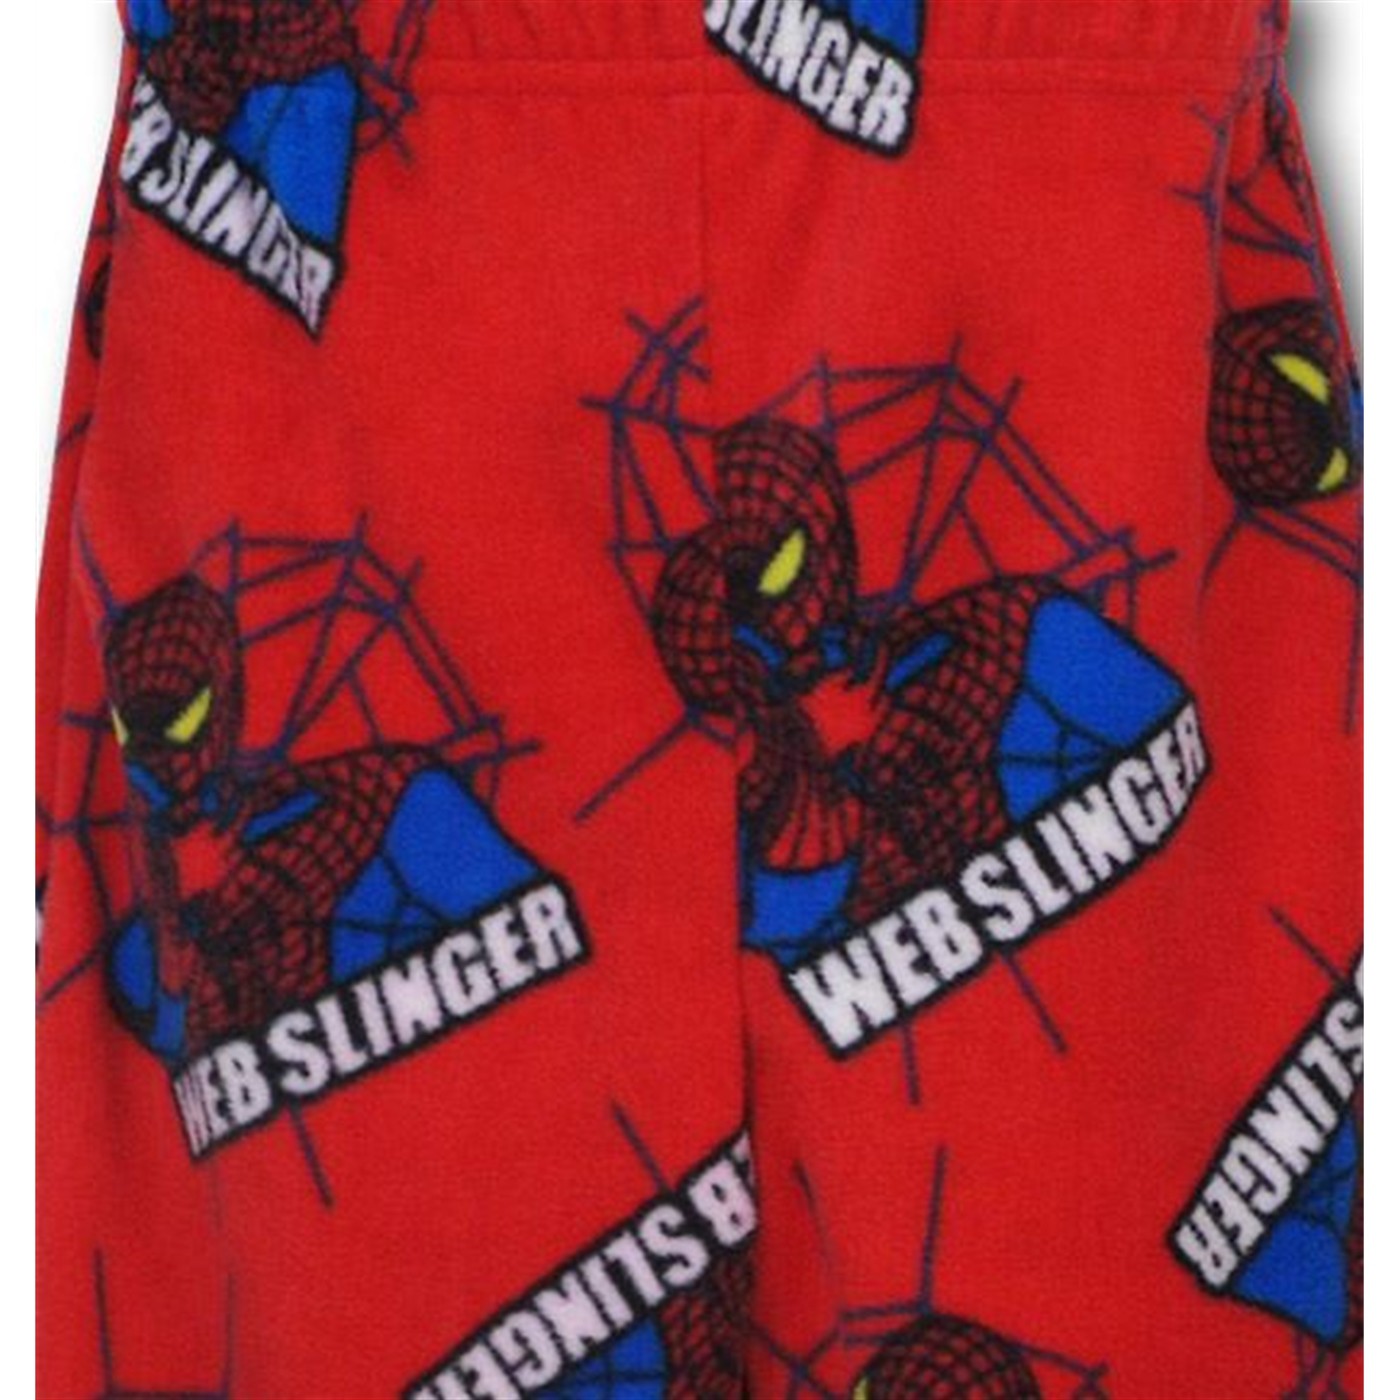 Spiderman Kids Web-Sling Pullover Pajamas